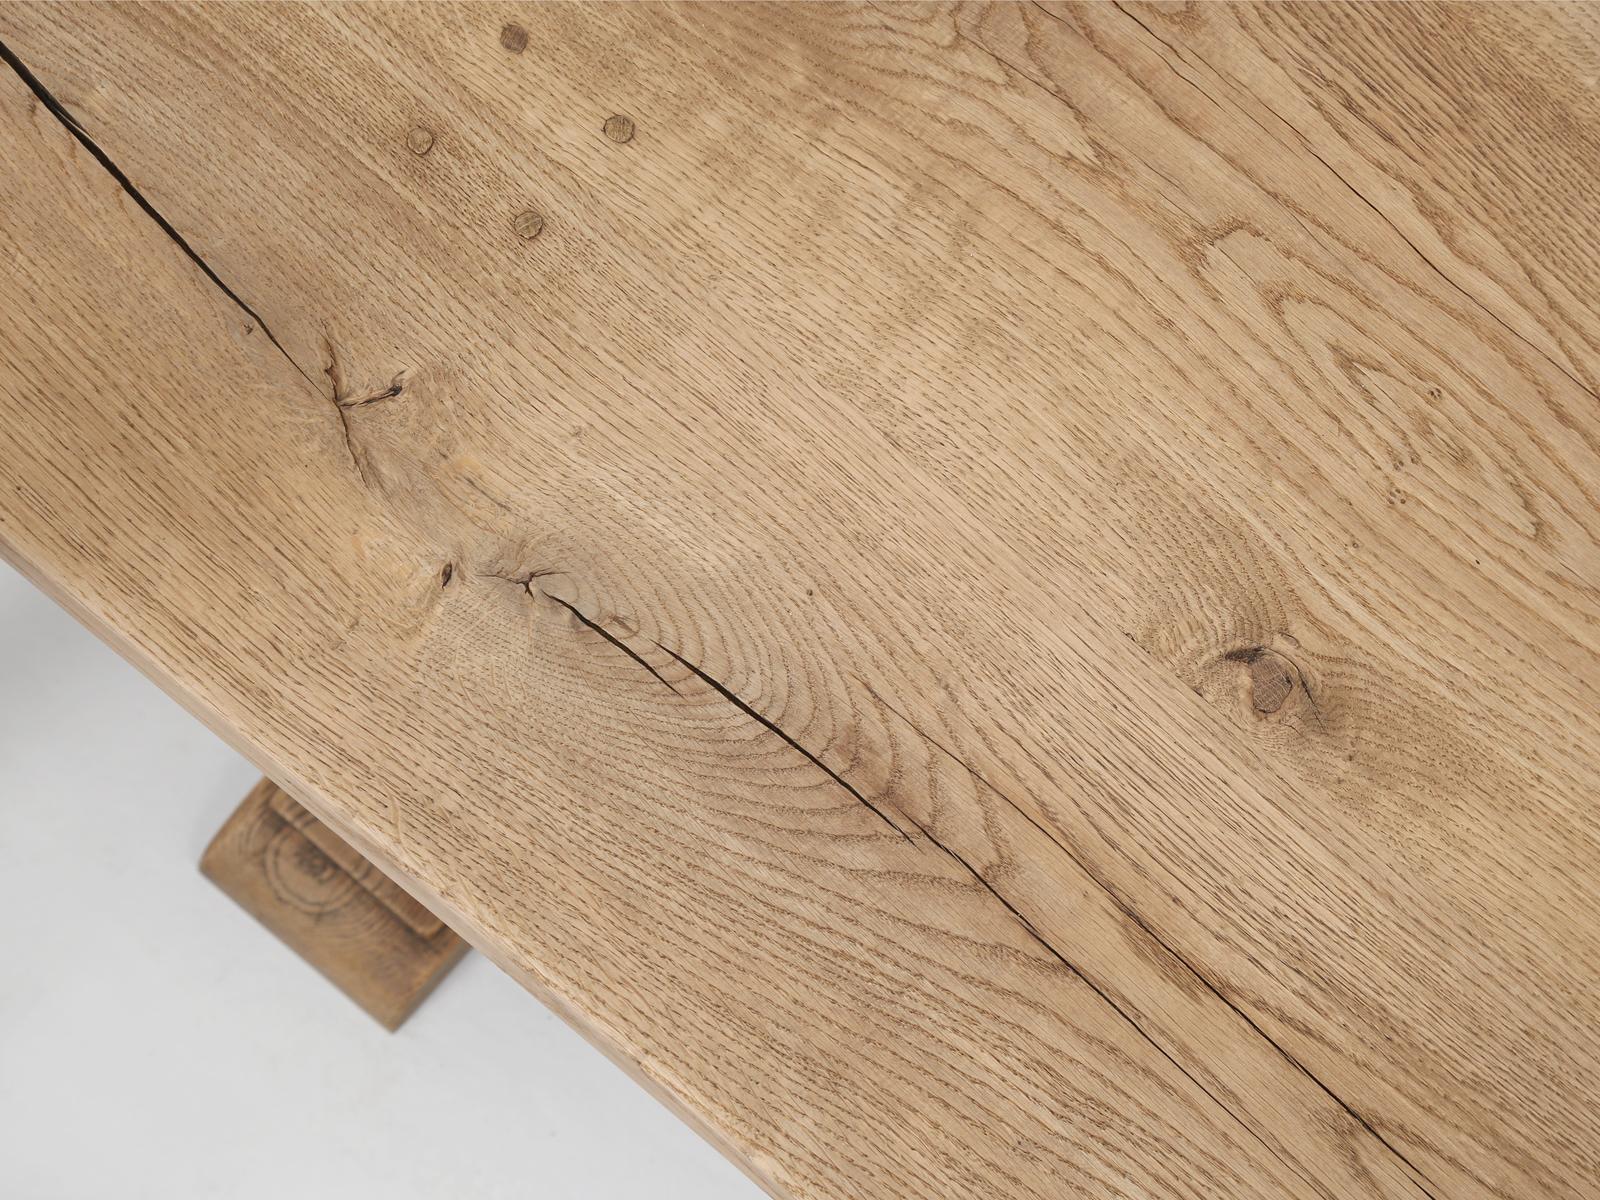 Oak Antique Authentic French Farm Table Original Finish Wood Pegged Construction